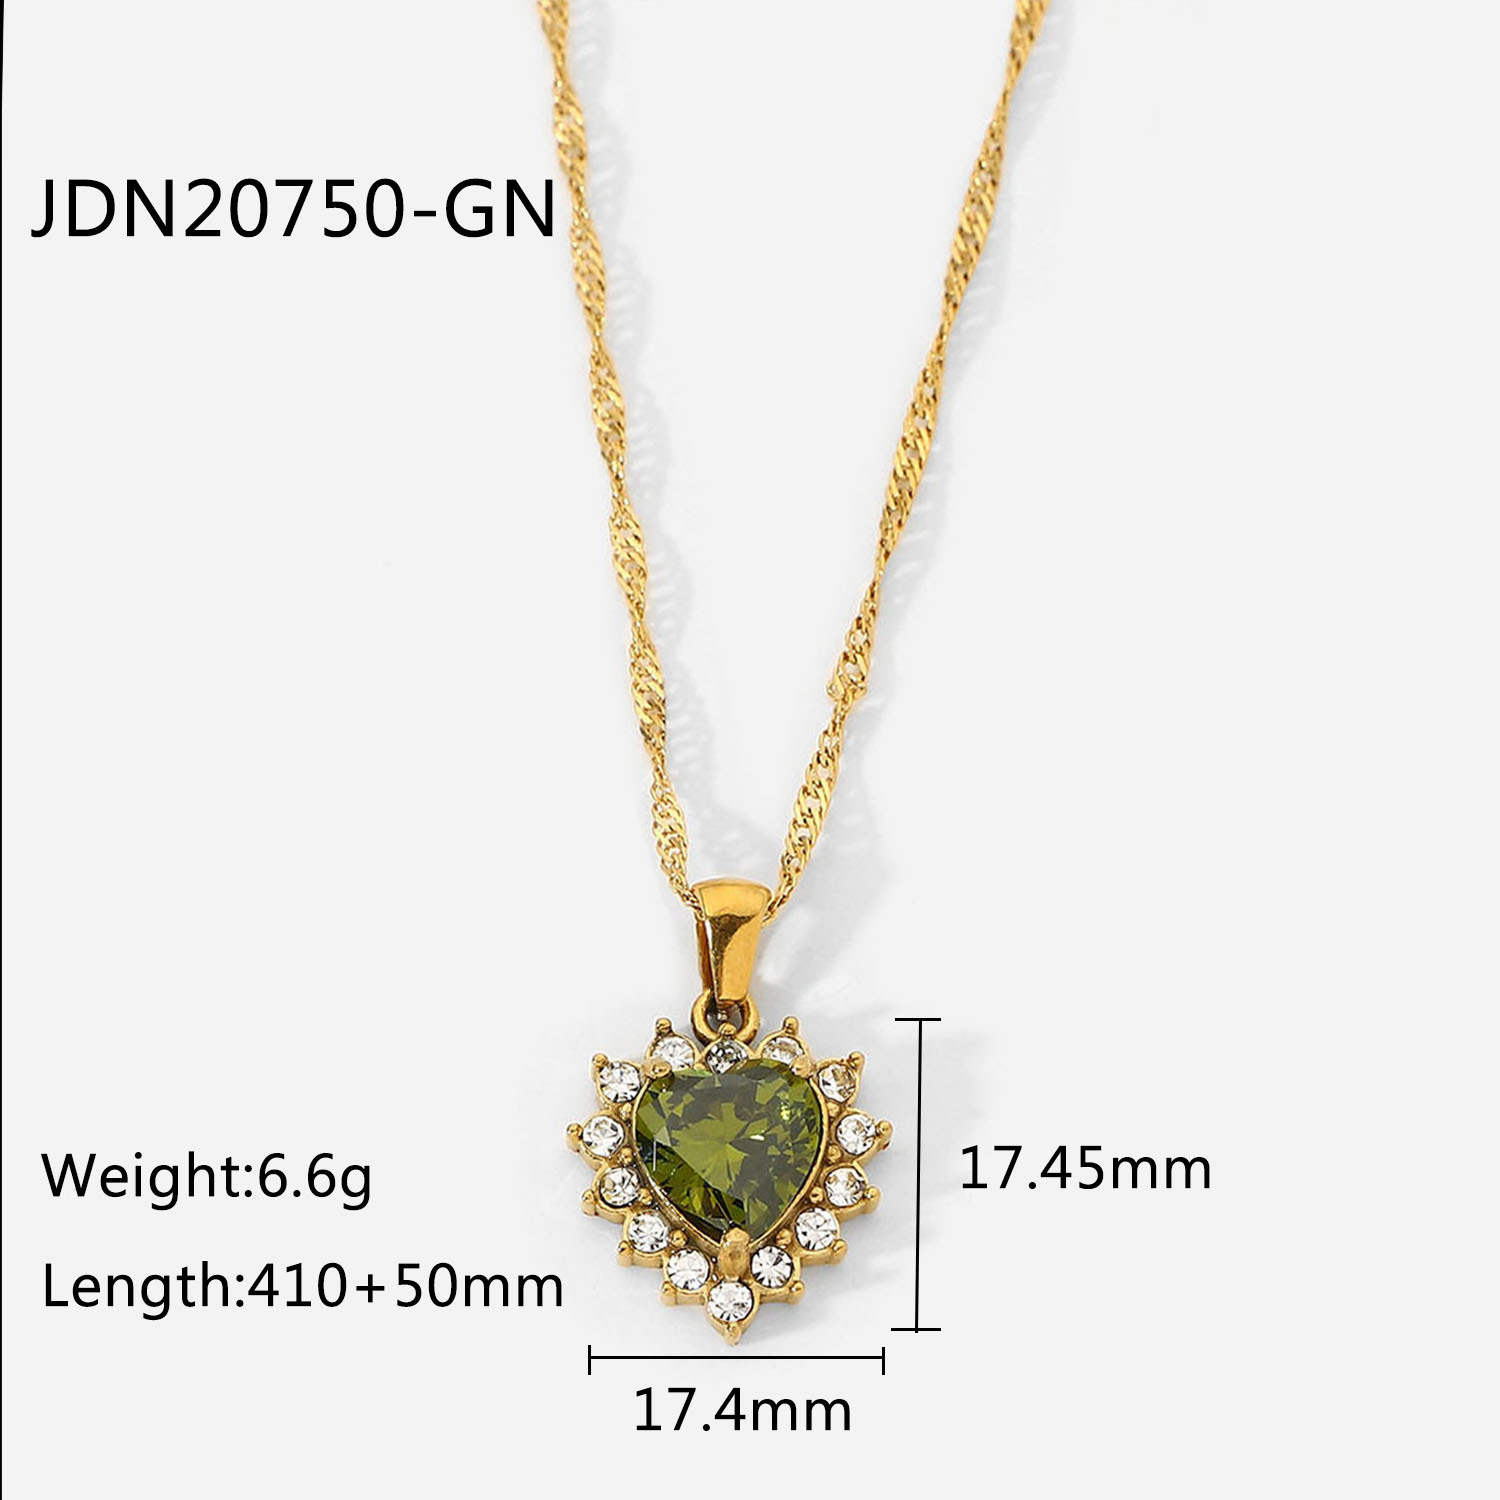 JDN20750-GN